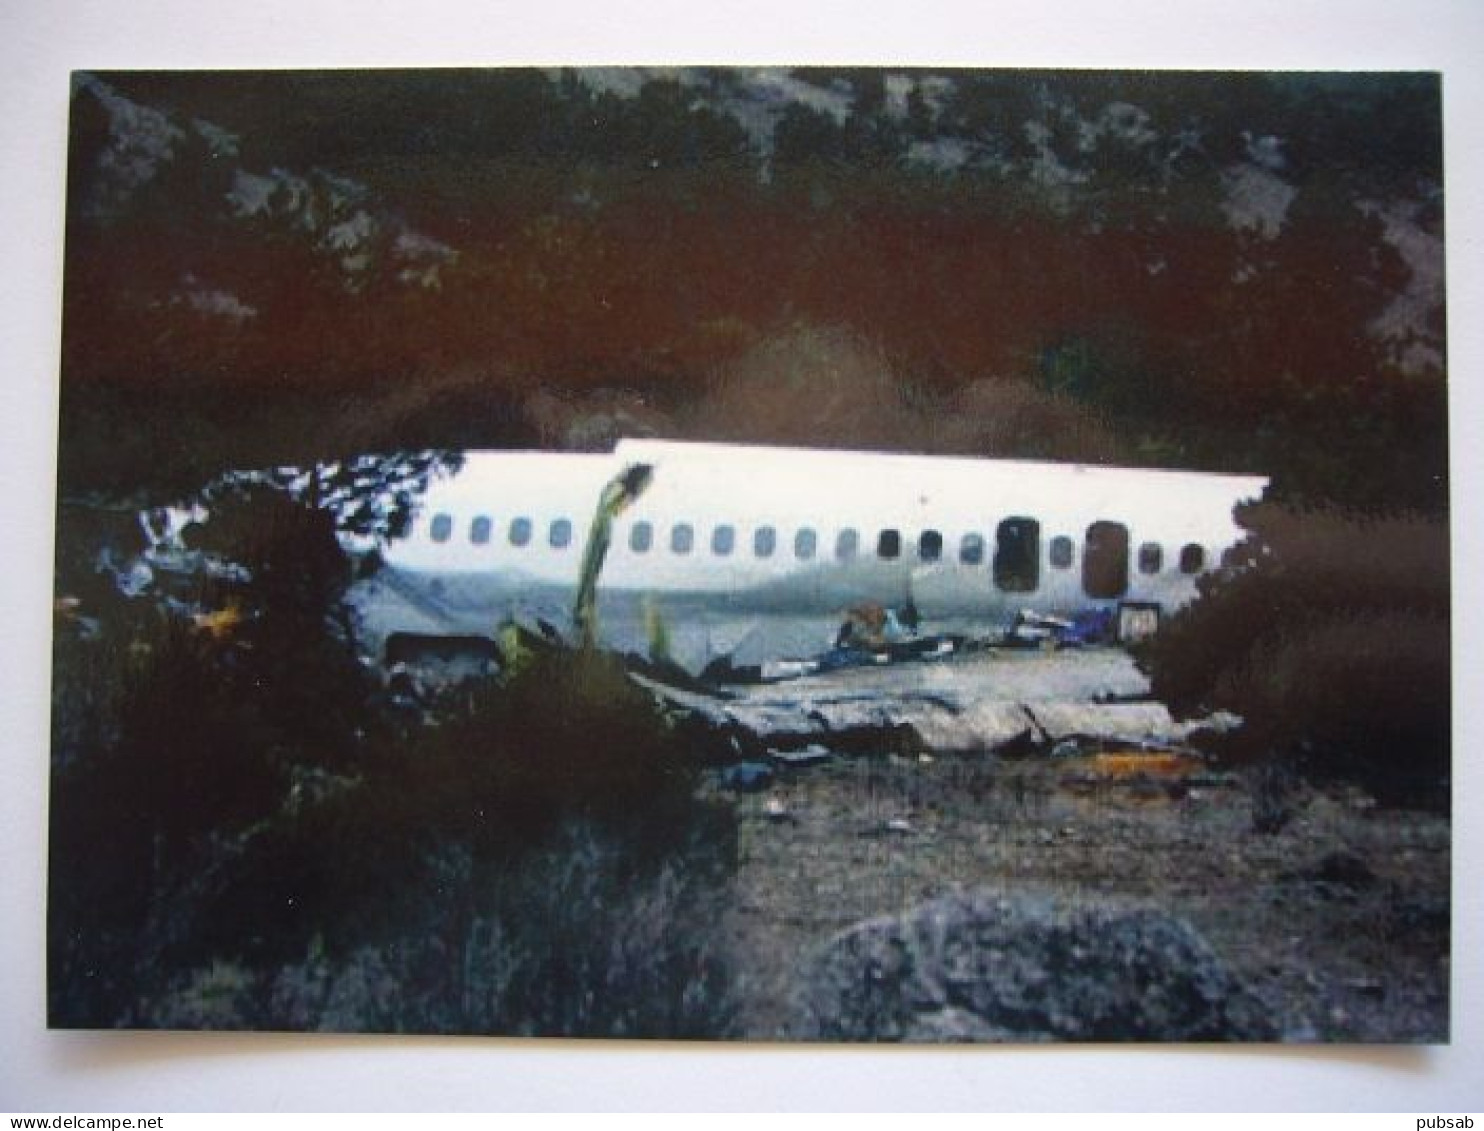 Avion / Airplane / TACA / Airbus 320 / Plane Skids Off Runway / May 30, 2008 / At Tegucigalpa - Accidentes